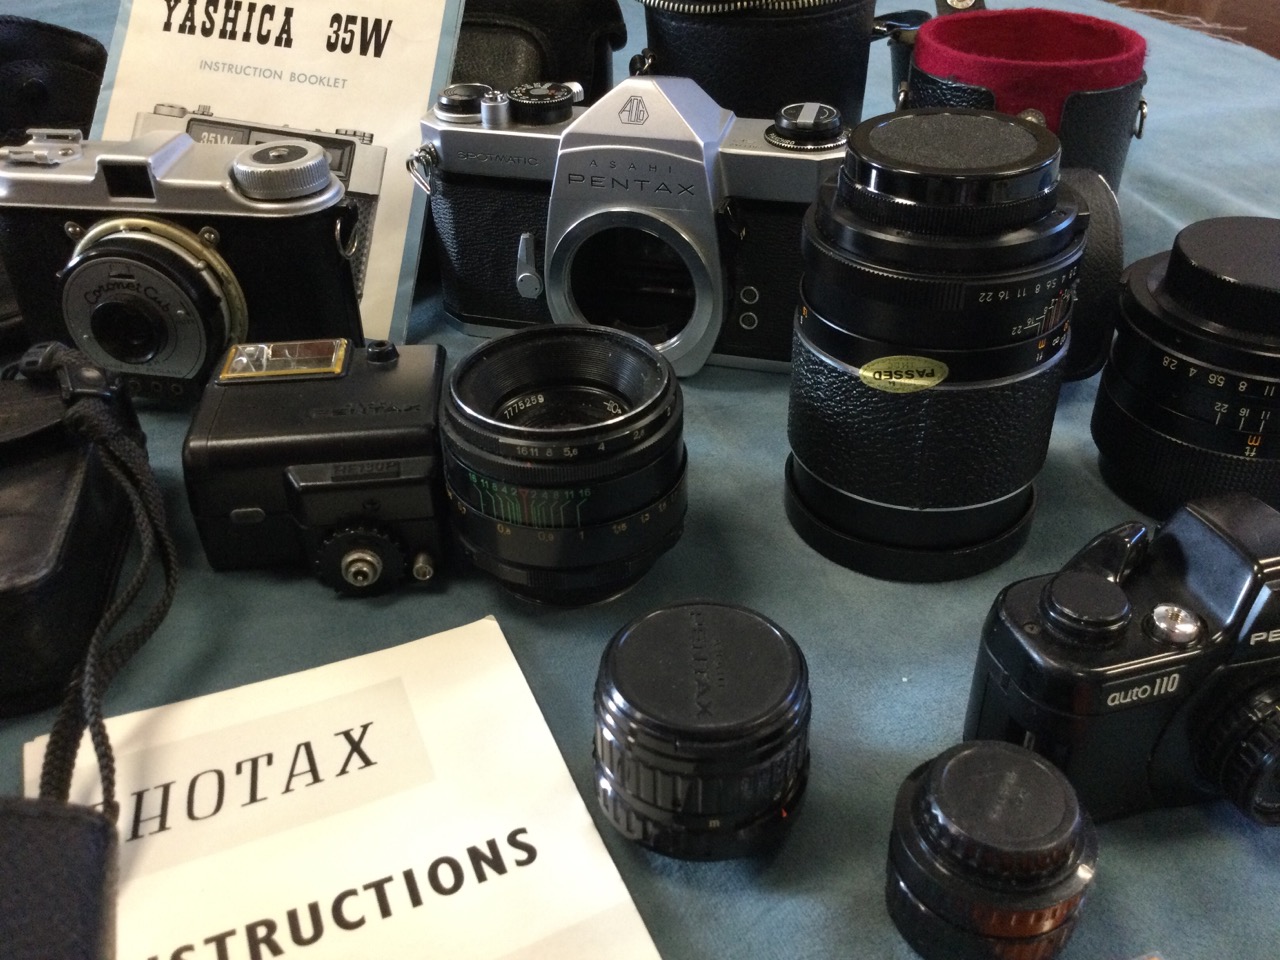 Miscellaneous cameras & photographic equipment including a leather cased Pentax, lenses, flash - Bild 2 aus 3